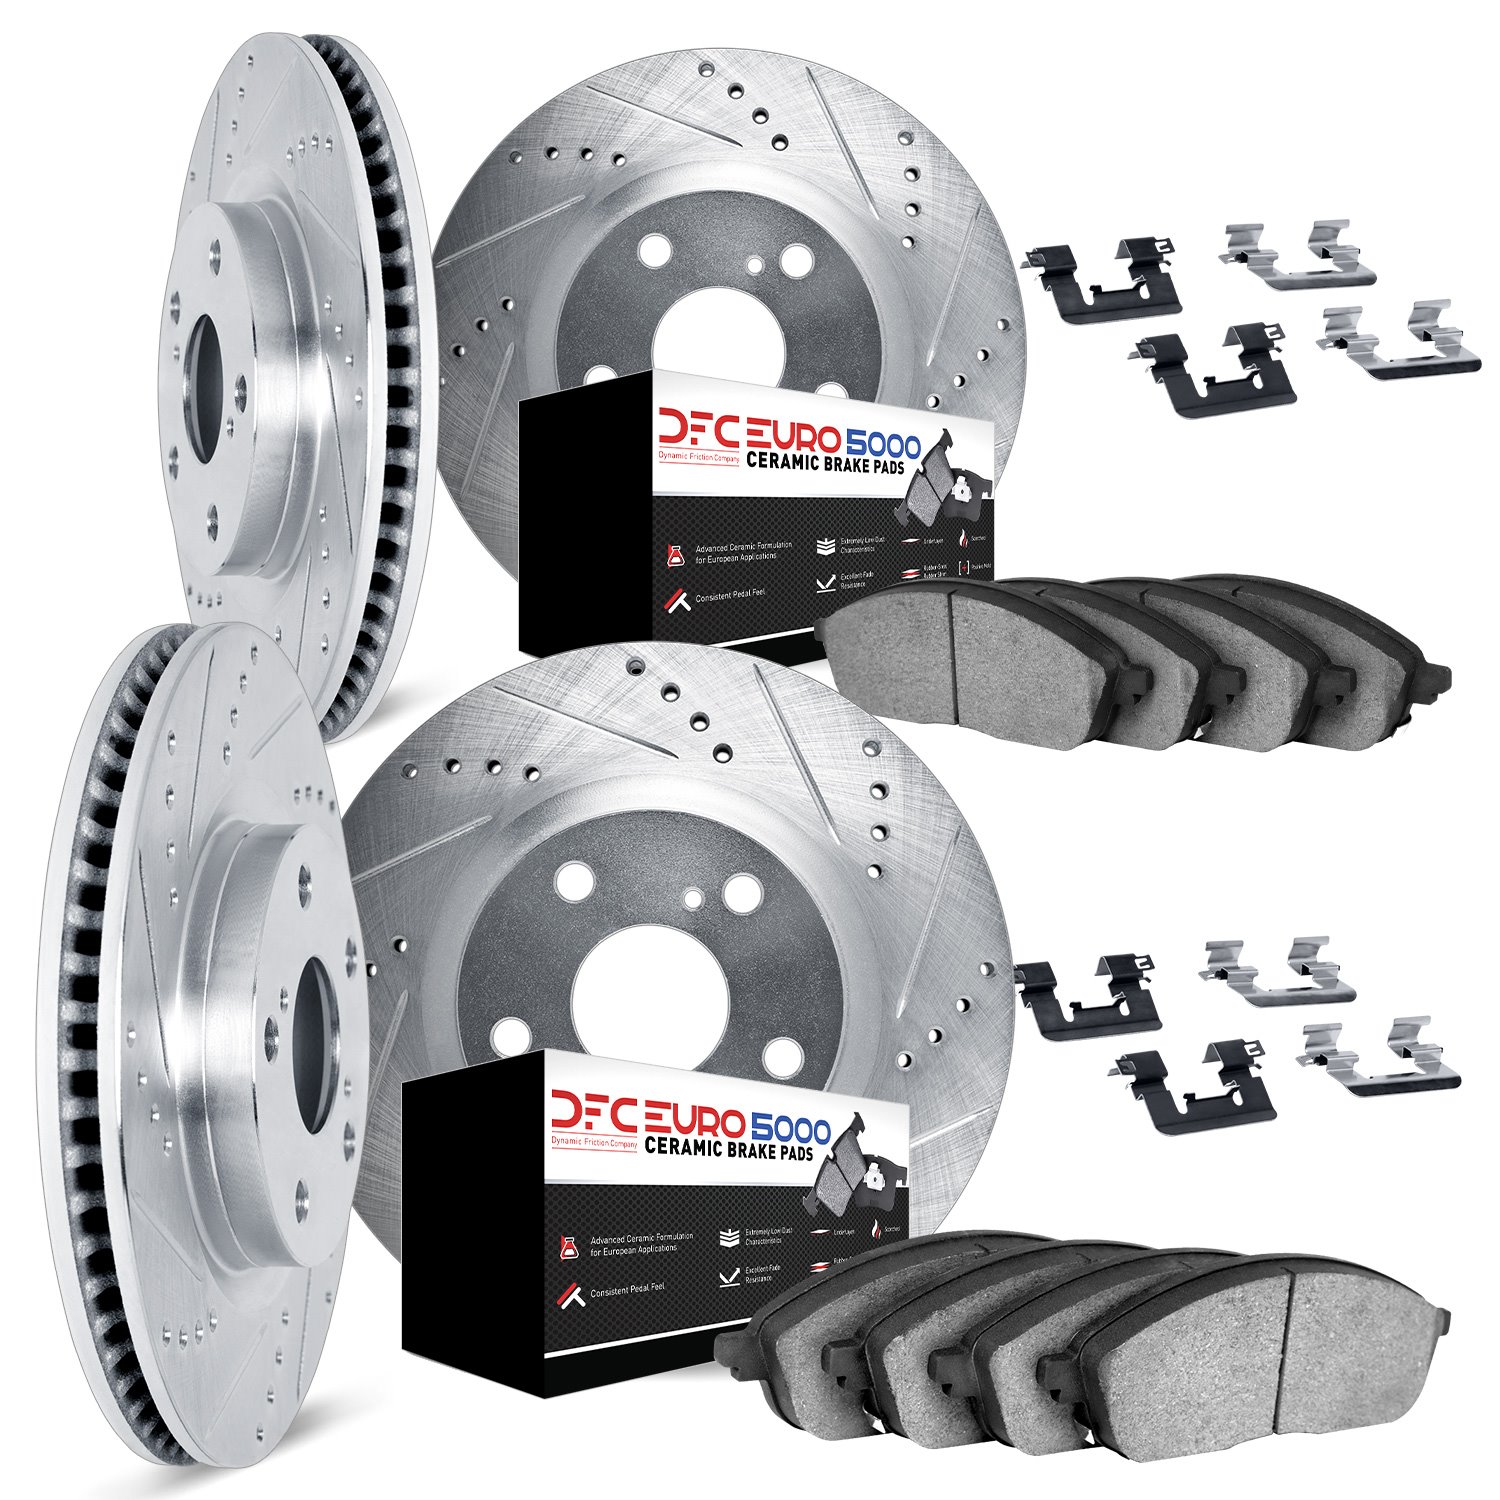 7614-75002 Drilled/Slotted Brake Rotors w/5000 Euro Ceramic Brake Pads Kit & Hardware [Silver], Fits Select Lexus/Toyota/Scion,